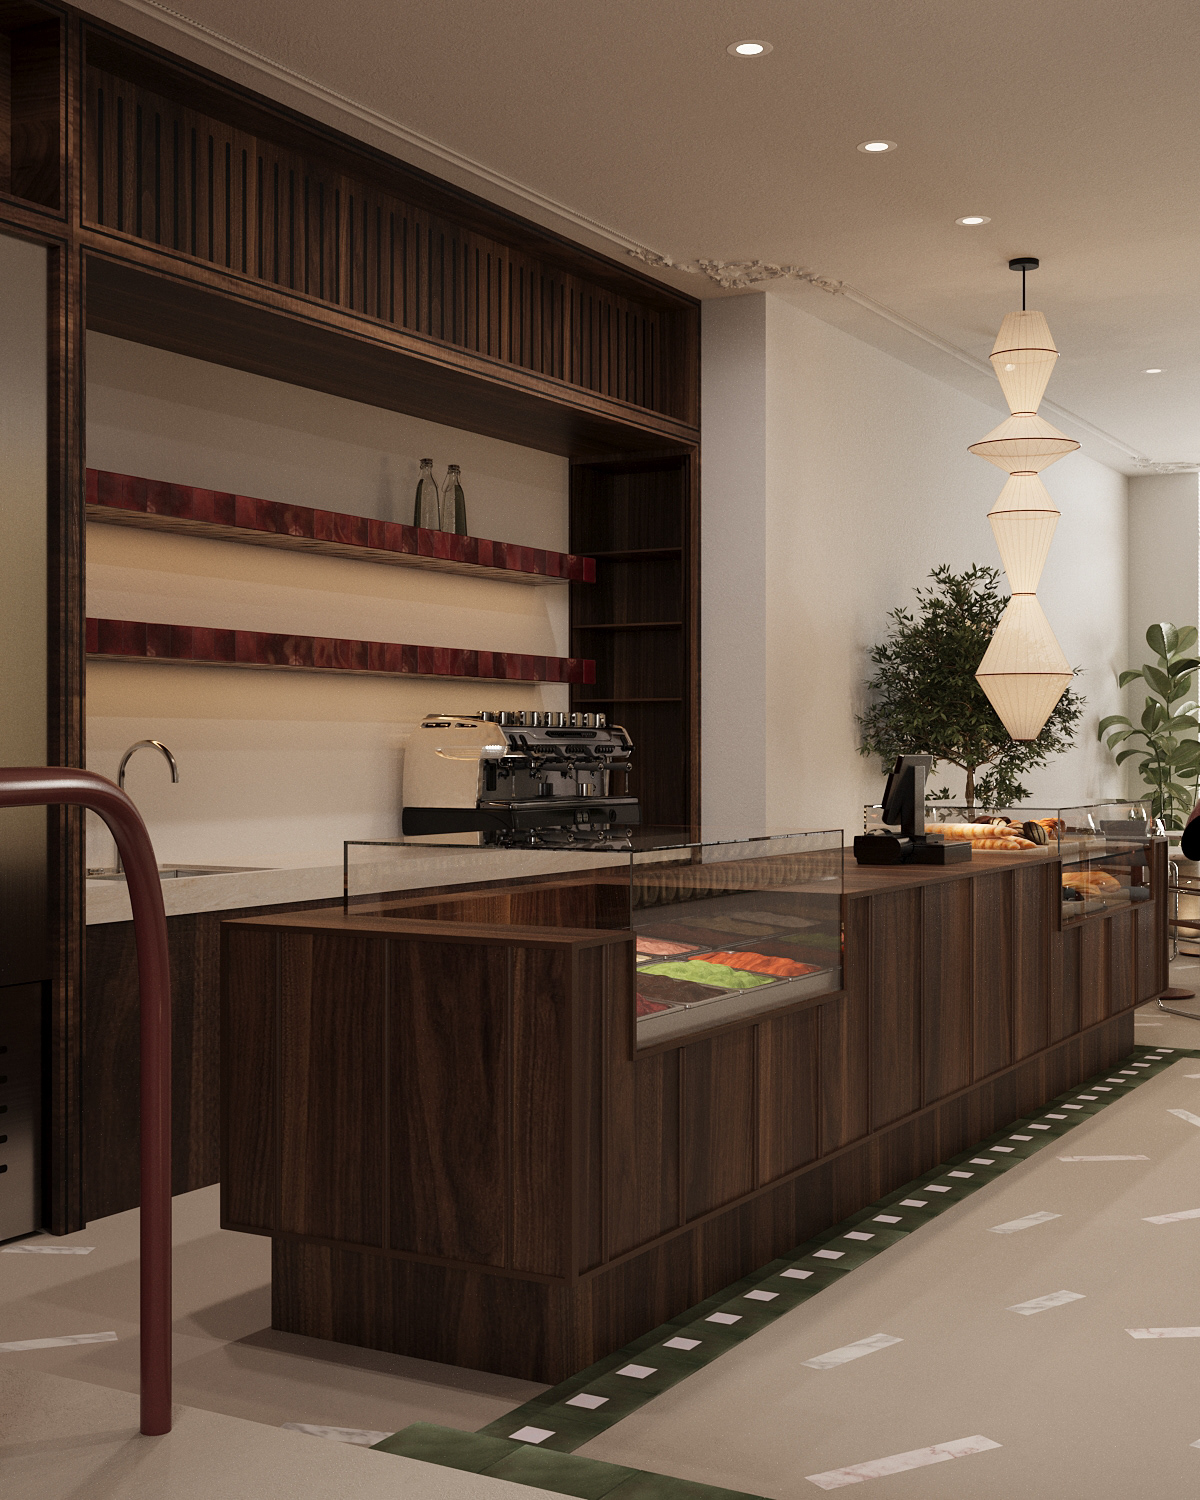 interior design  cafe interior bakery design  BAKERY INTERIOR DESIGN 3dviz